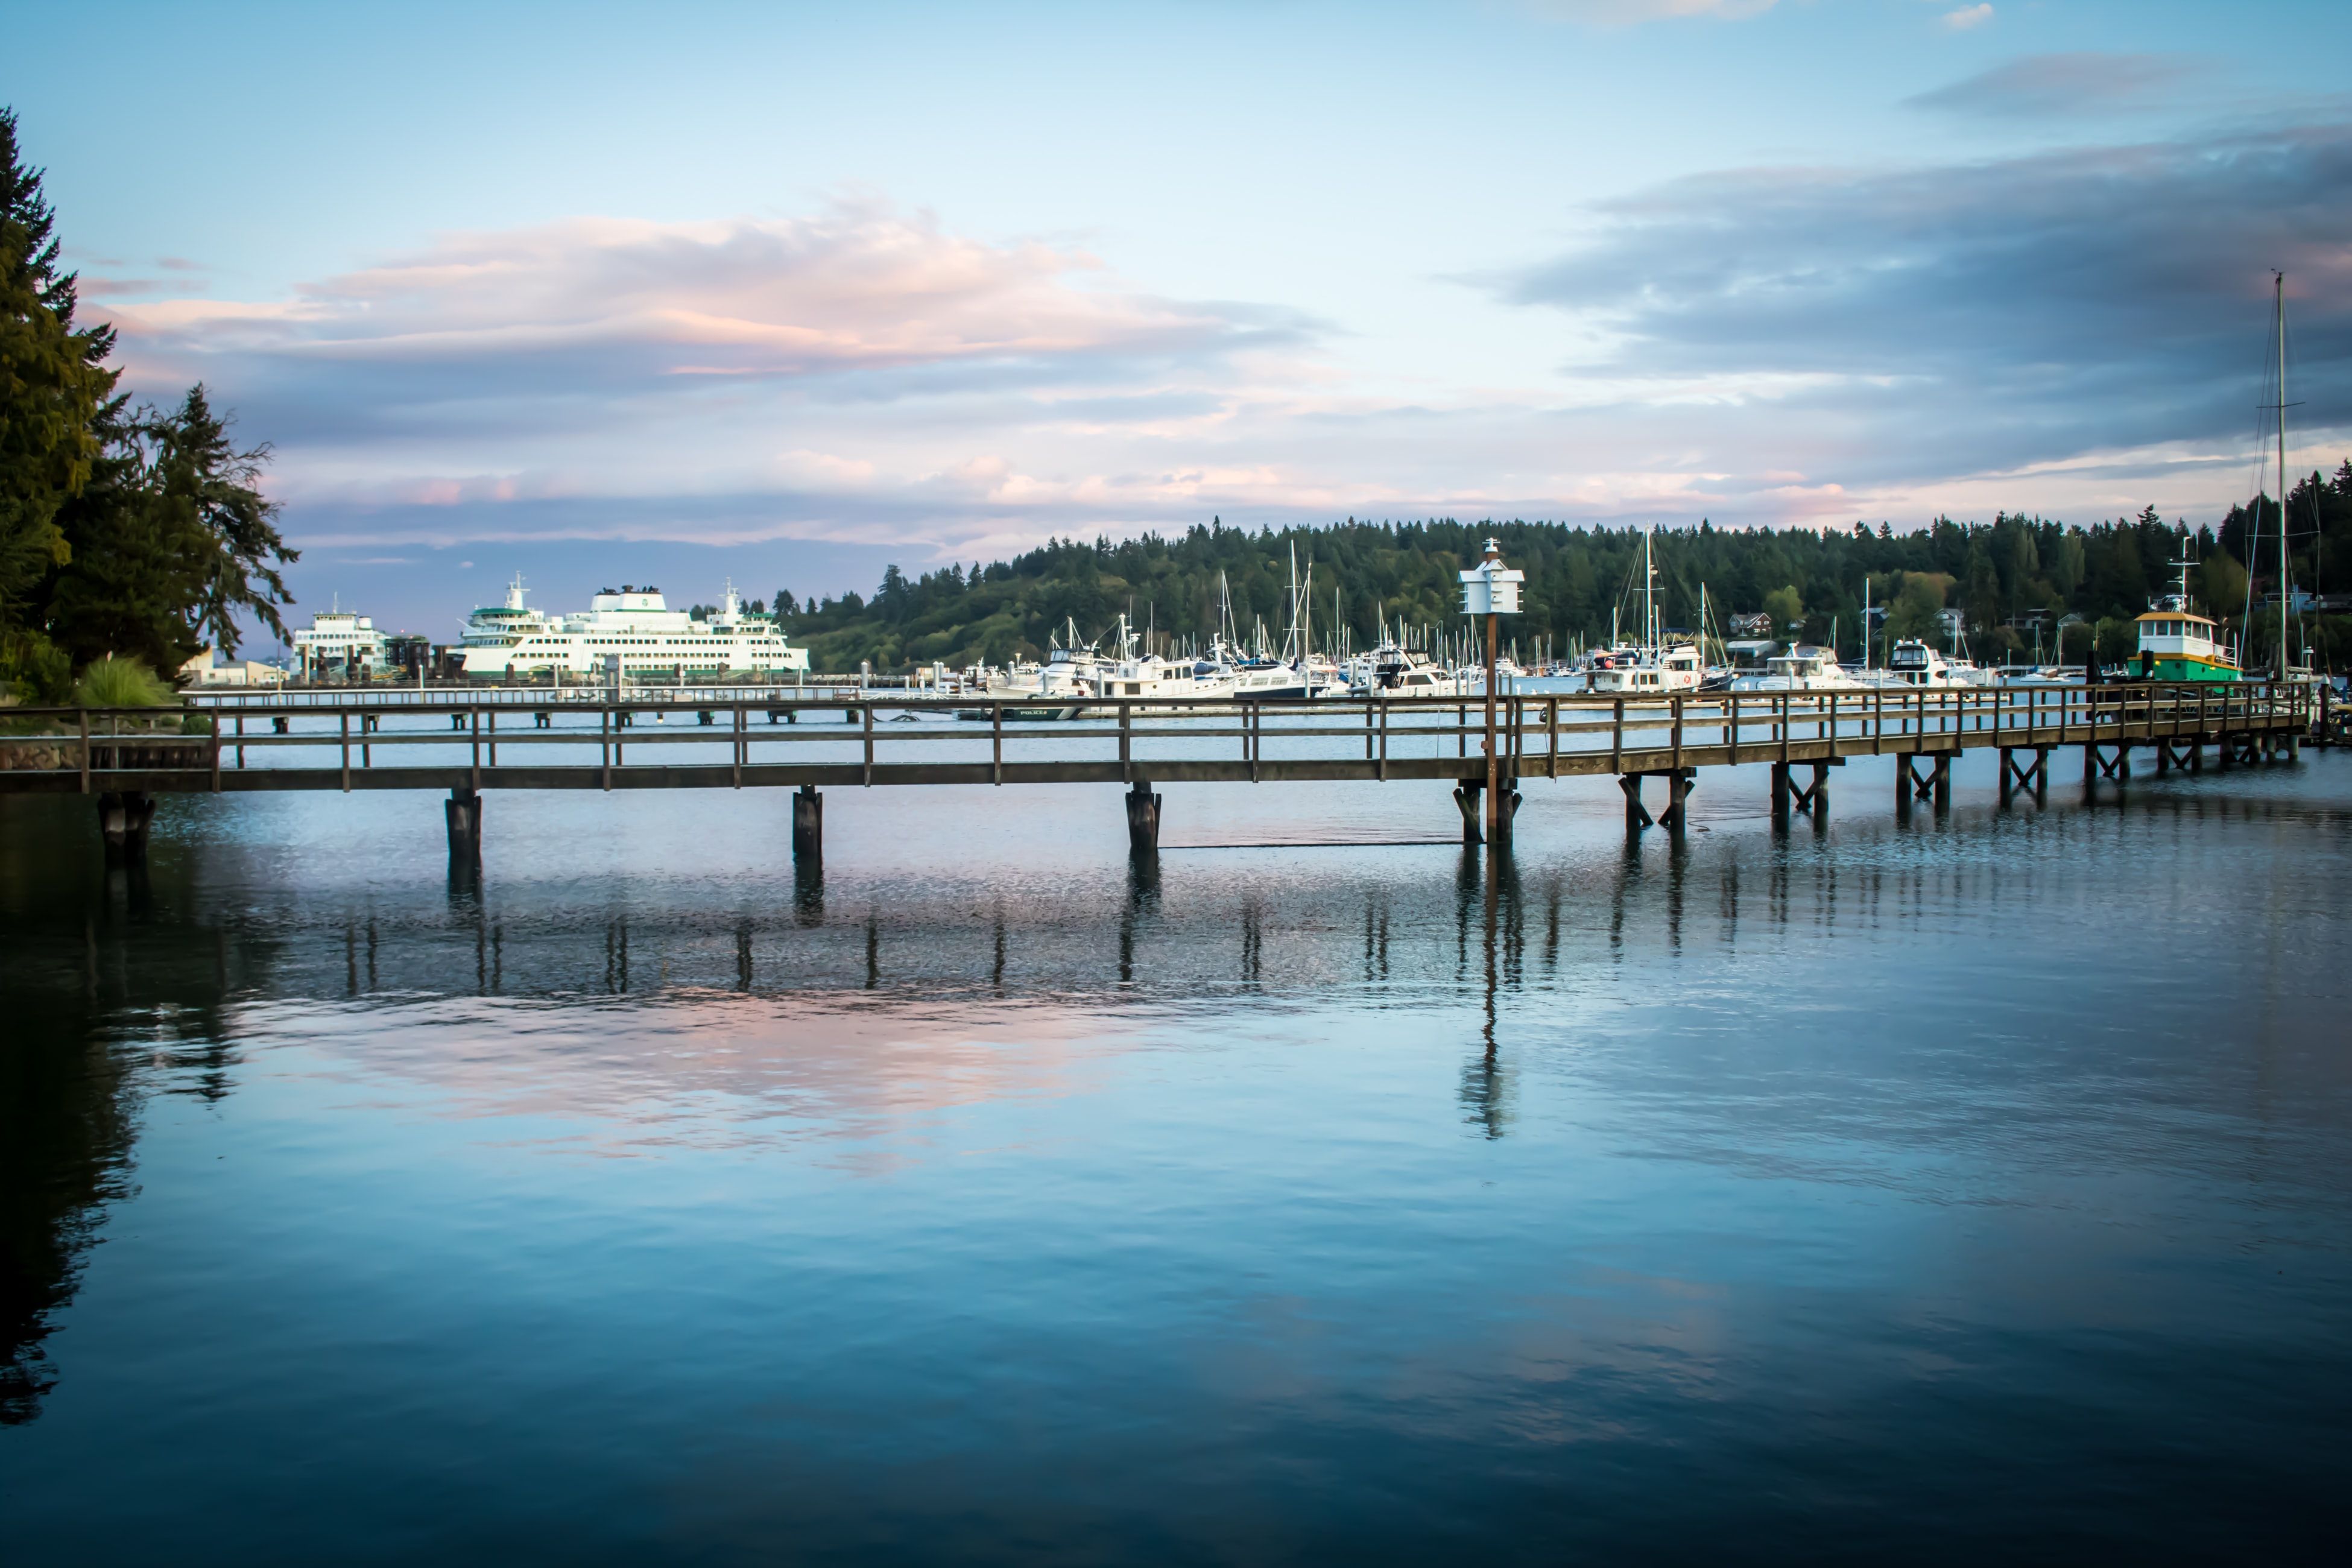 Pier on Bainbridge Island, Washington